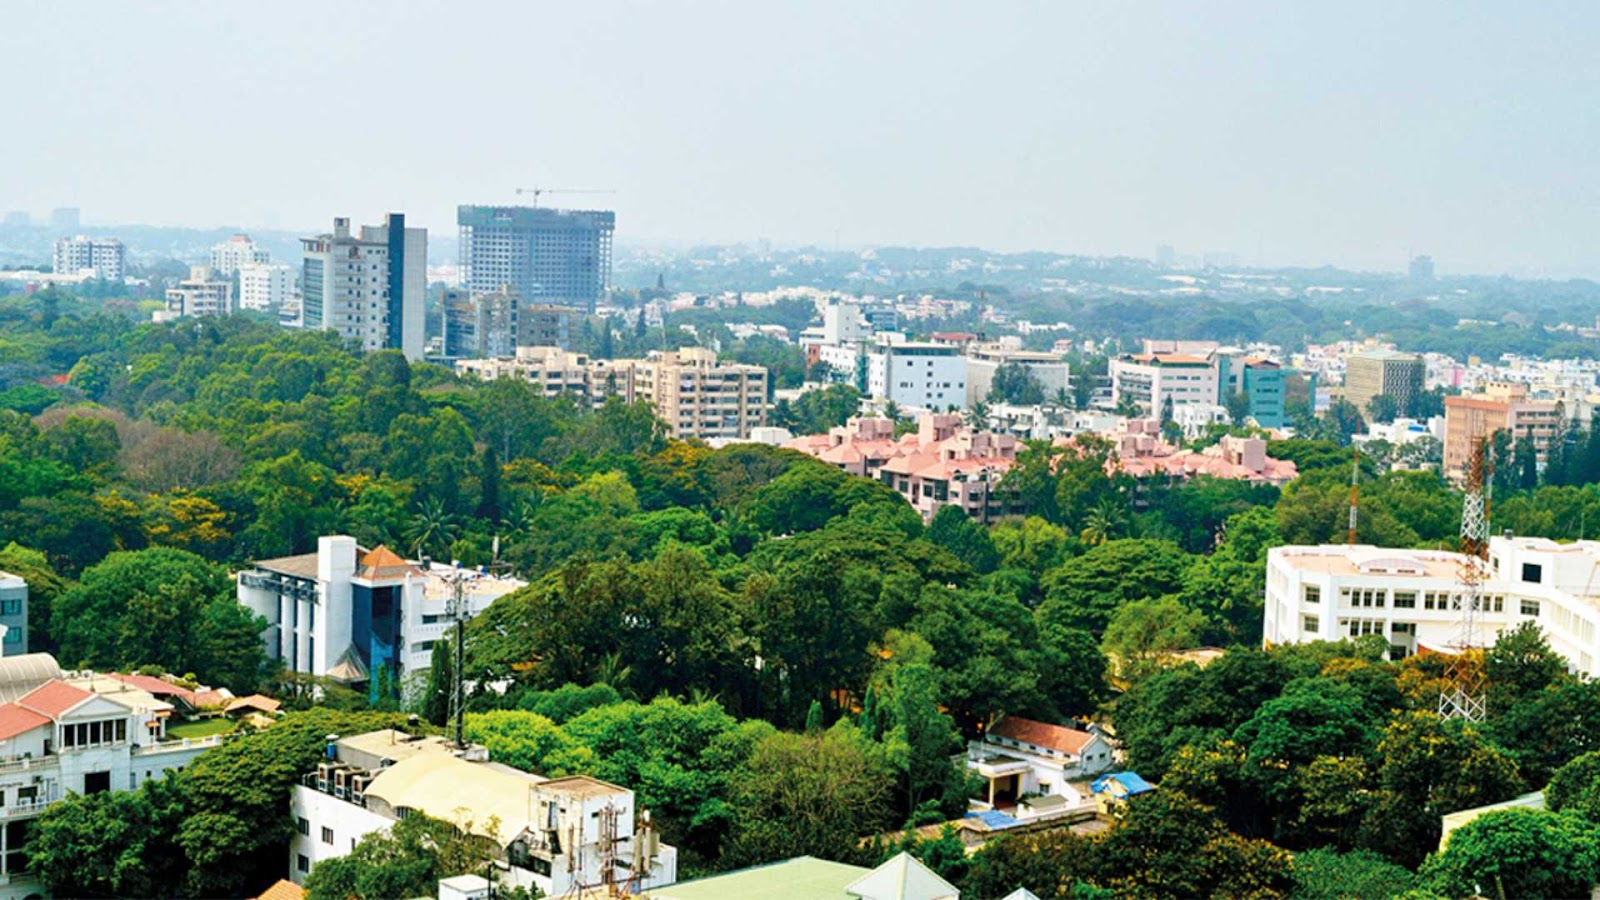 Posh Residential Areas in Chennai - Alwarpet
